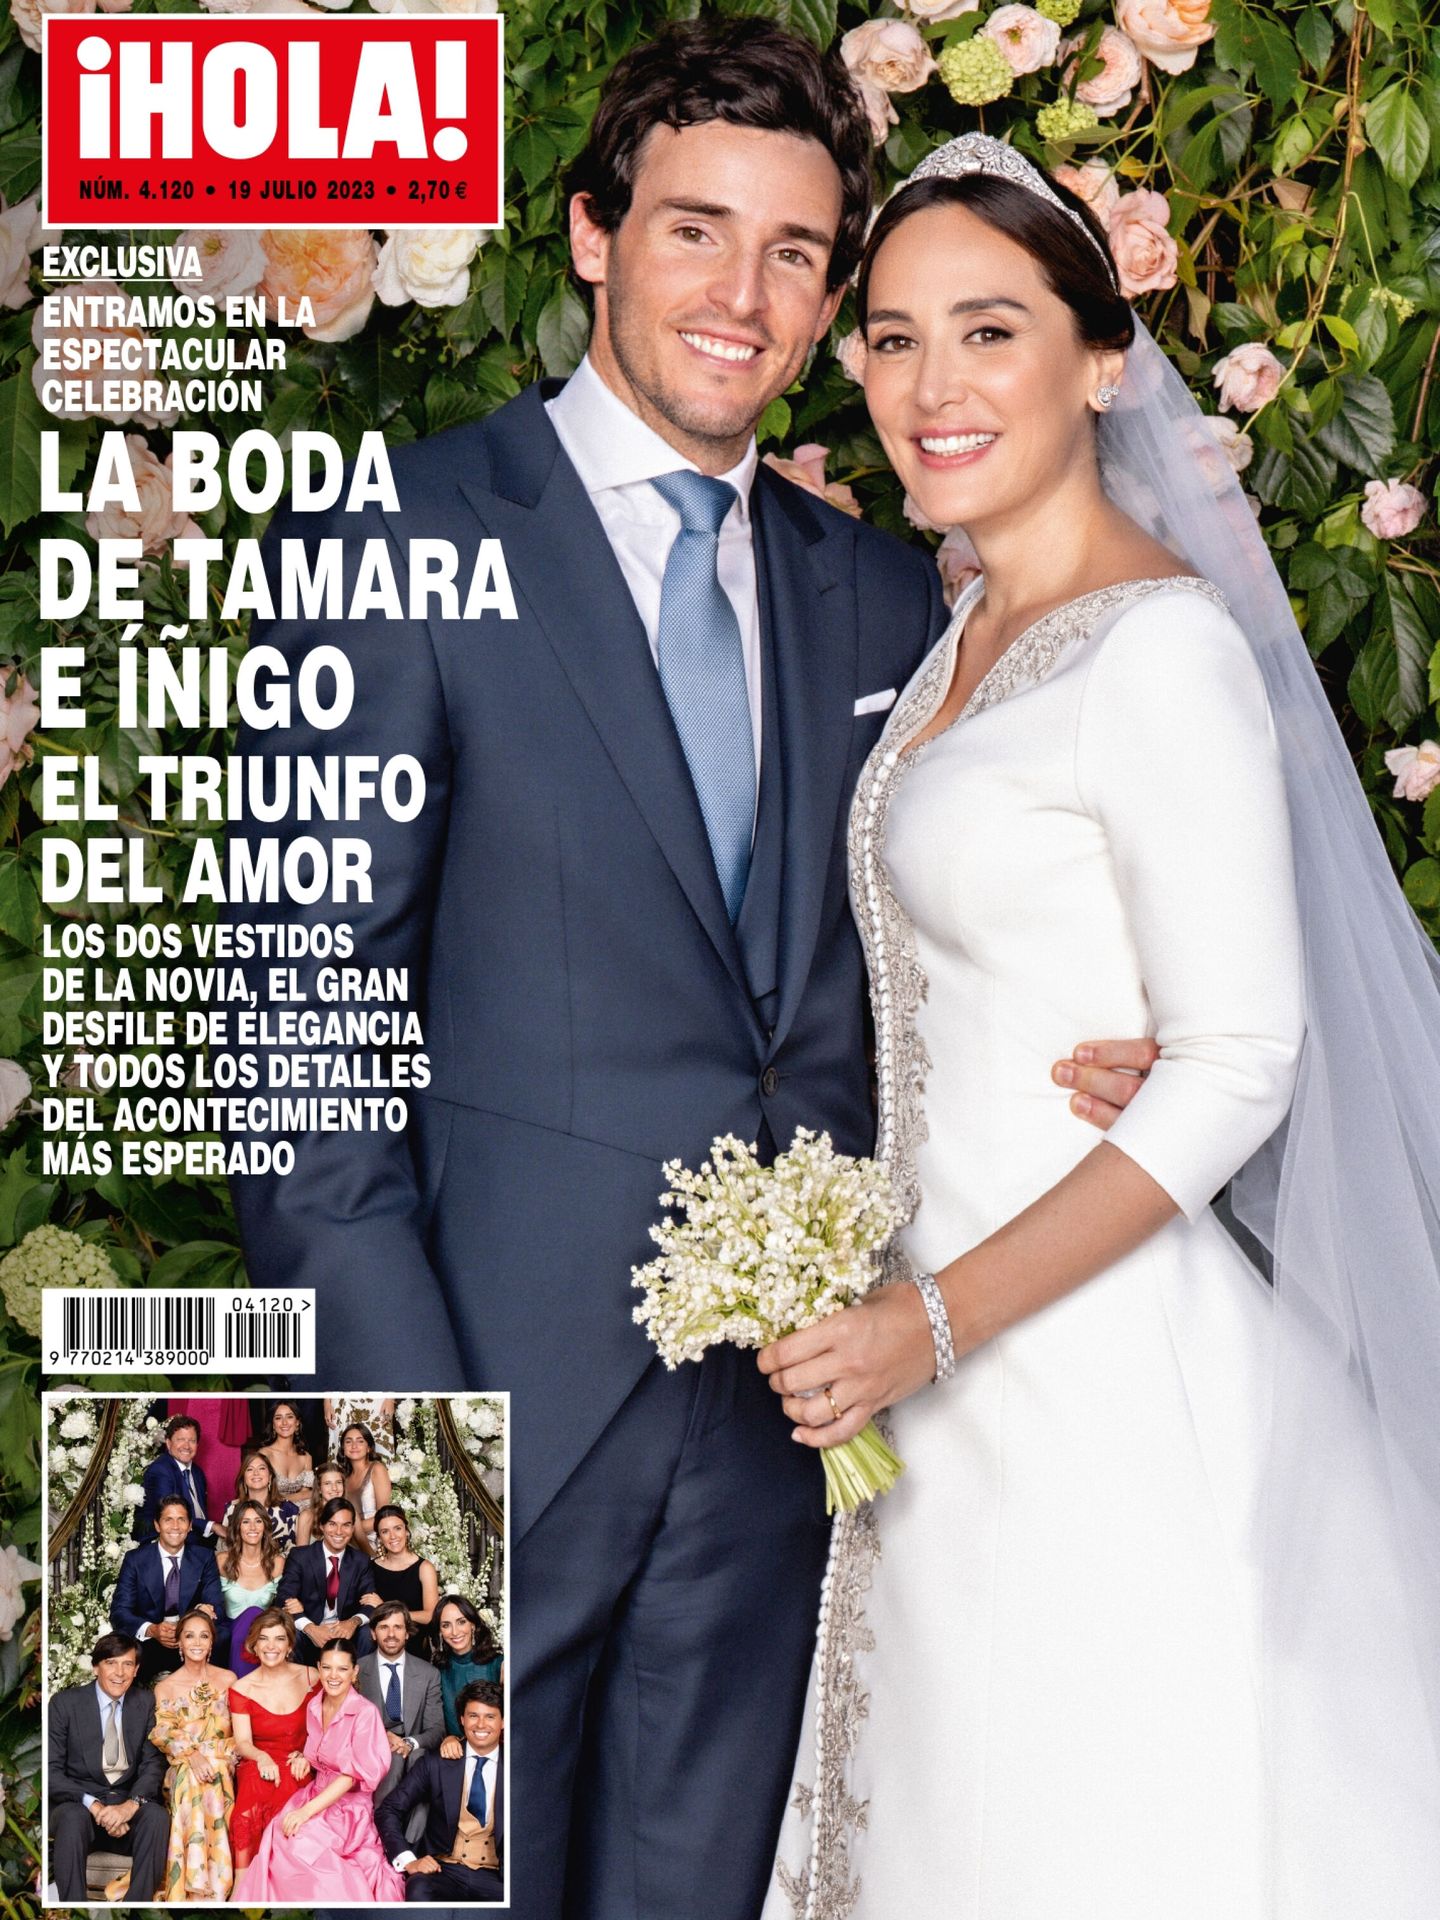 Portada de la revista '¡Hola!' con la boda de Tamara Falcó e Íñigo Onieva. (EFE)